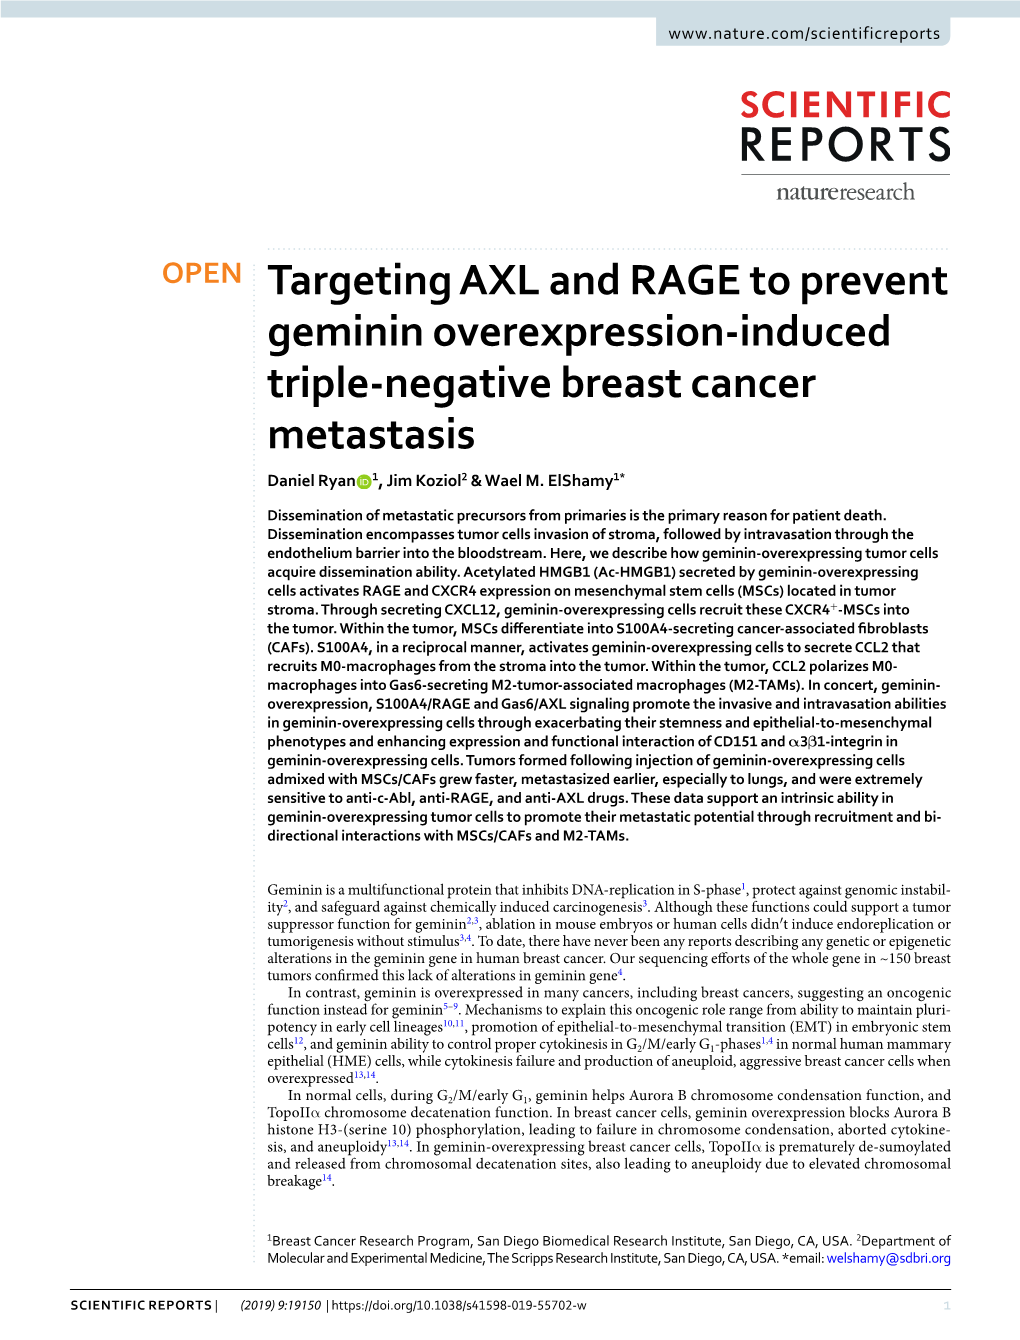 Targeting AXL and RAGE to Prevent Geminin Overexpression-Induced Triple-Negative Breast Cancer Metastasis Daniel Ryan 1, Jim Koziol2 & Wael M